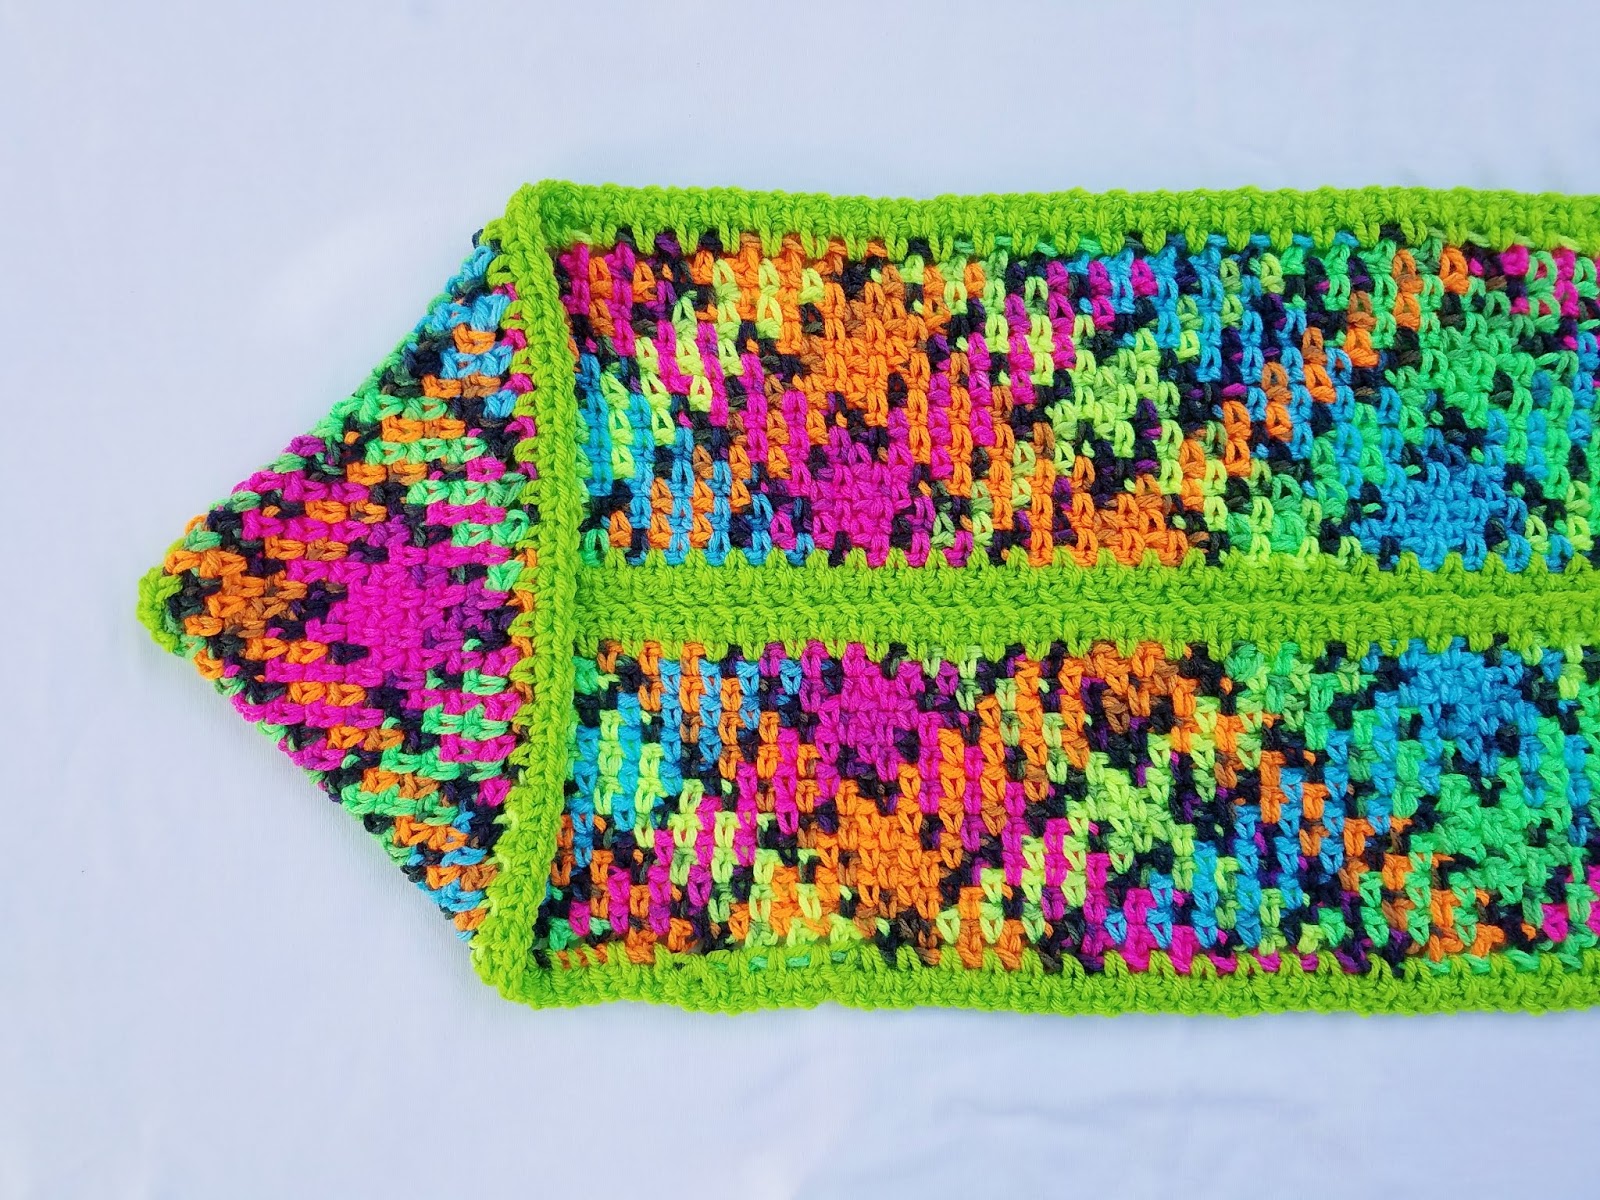 Colorwork: Planned Pooling in Crochet